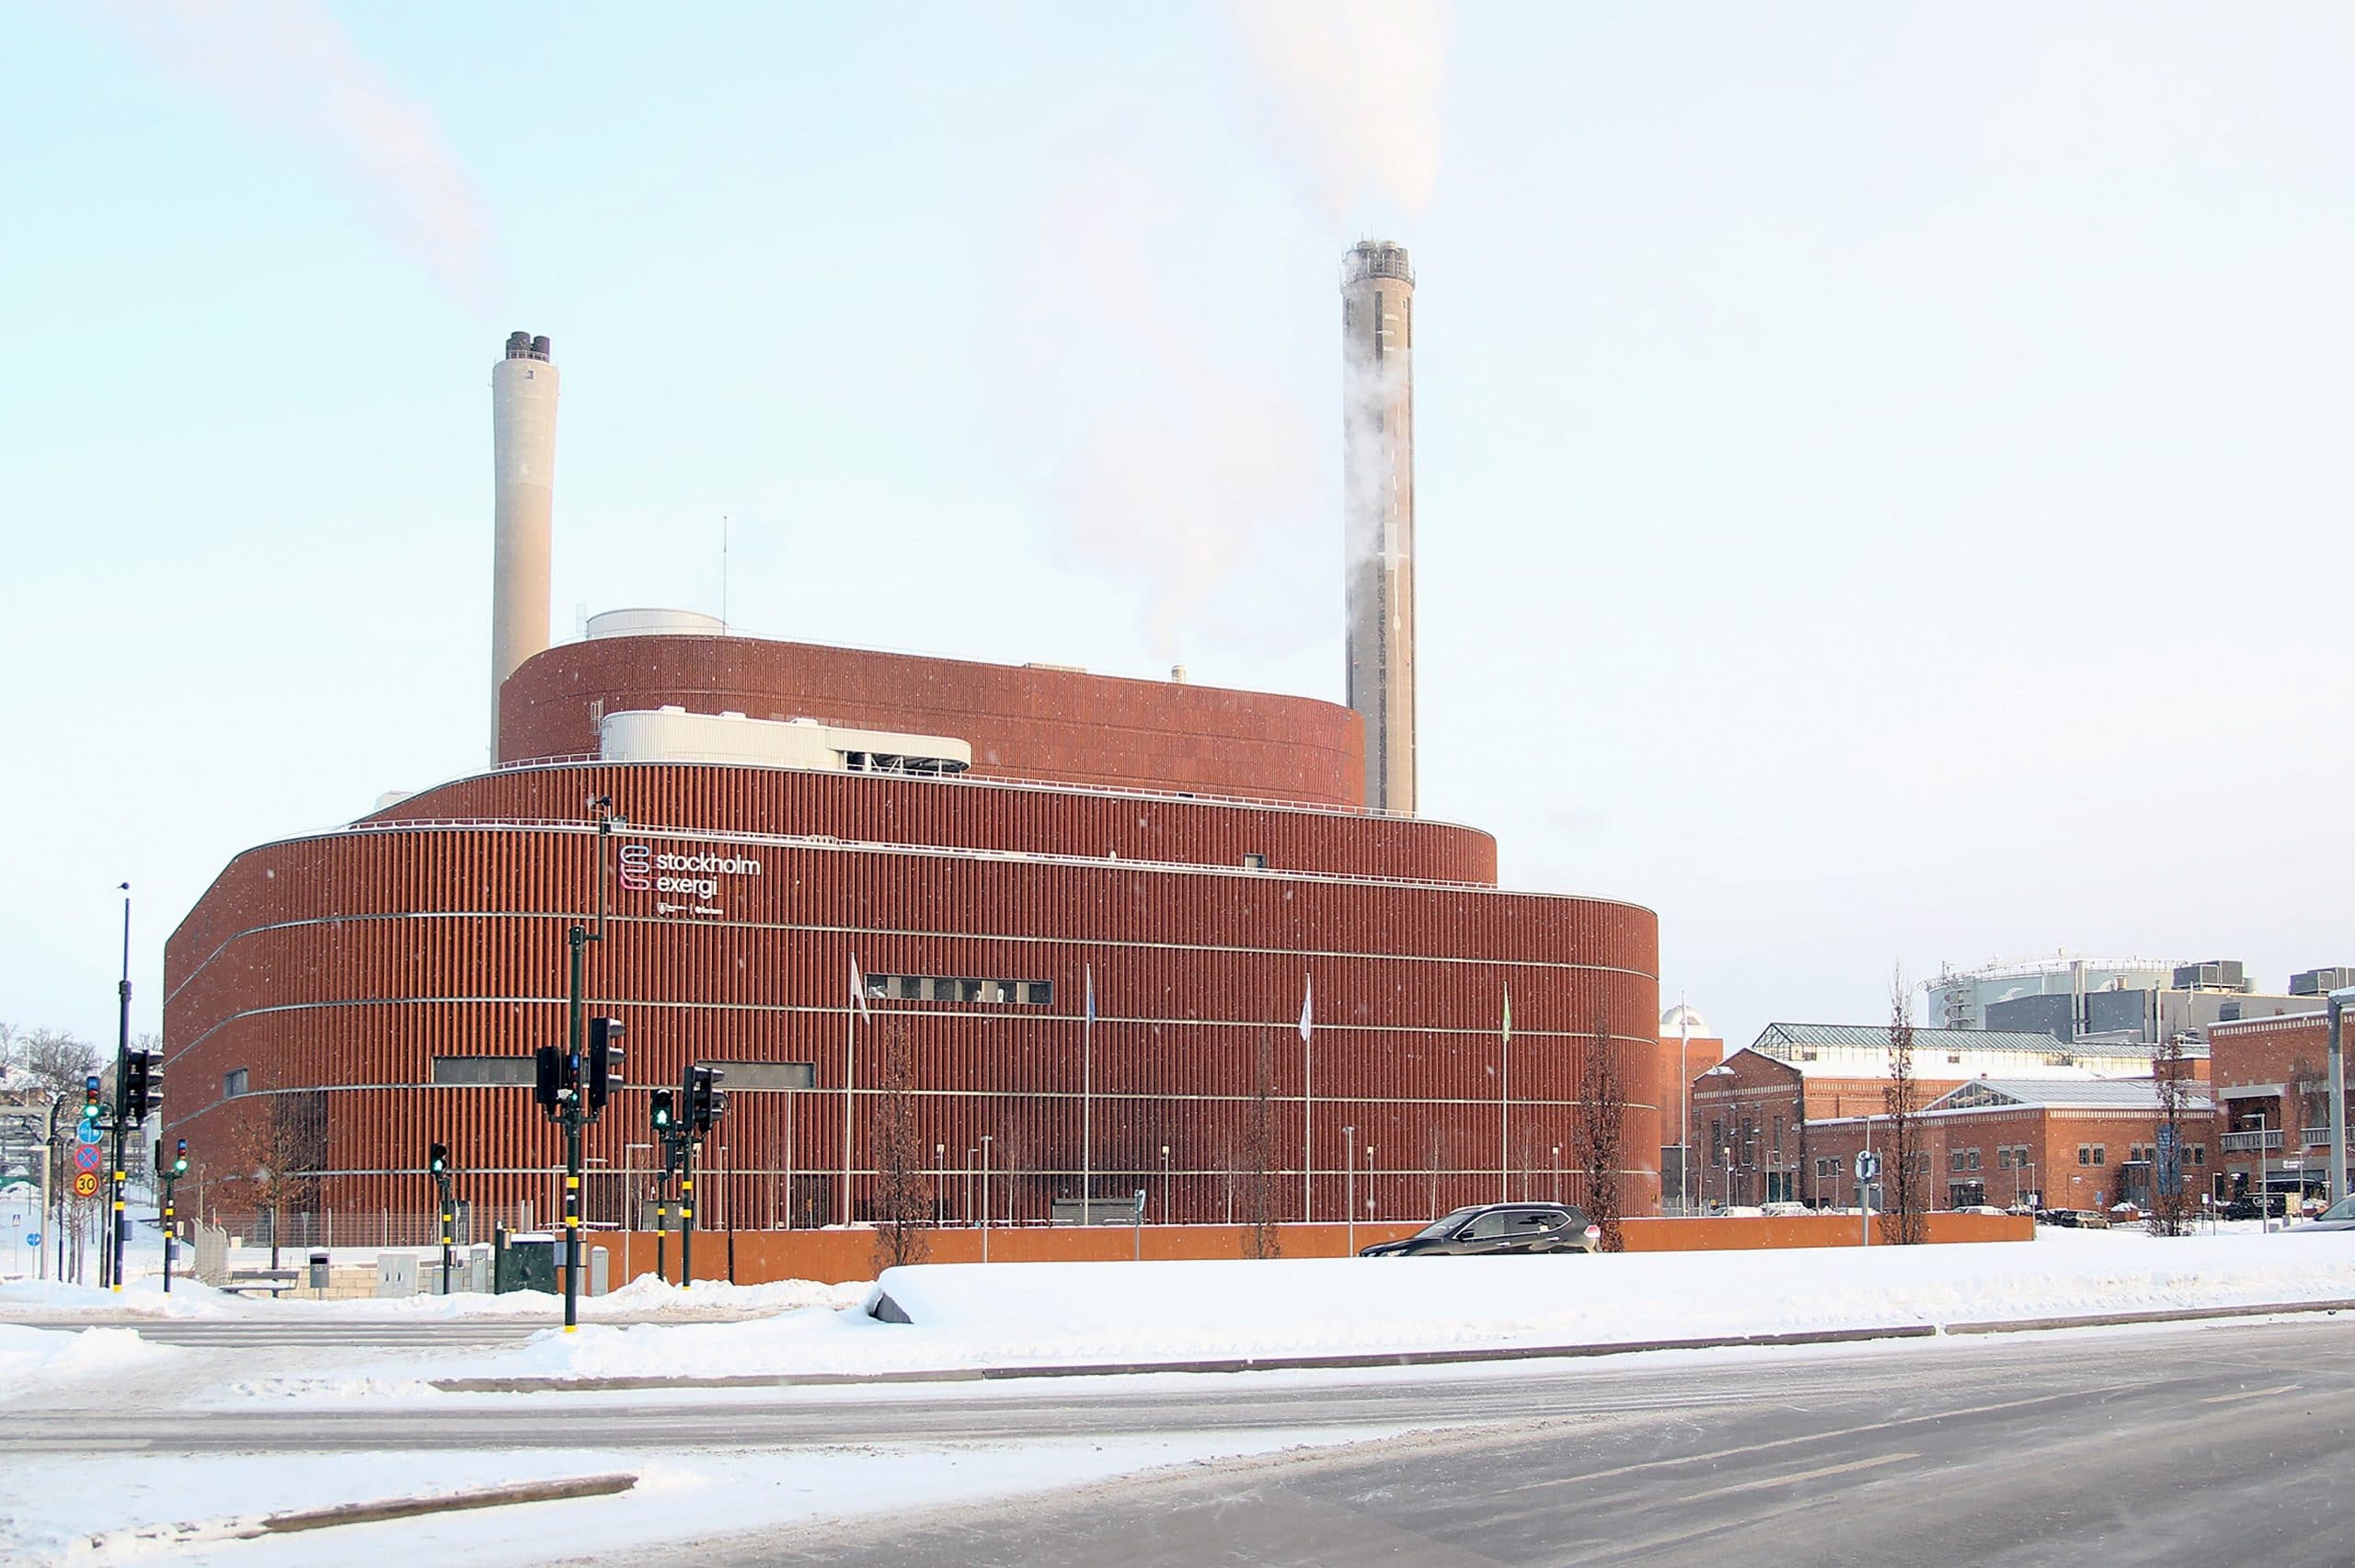 Värtaverket – heat and power plant